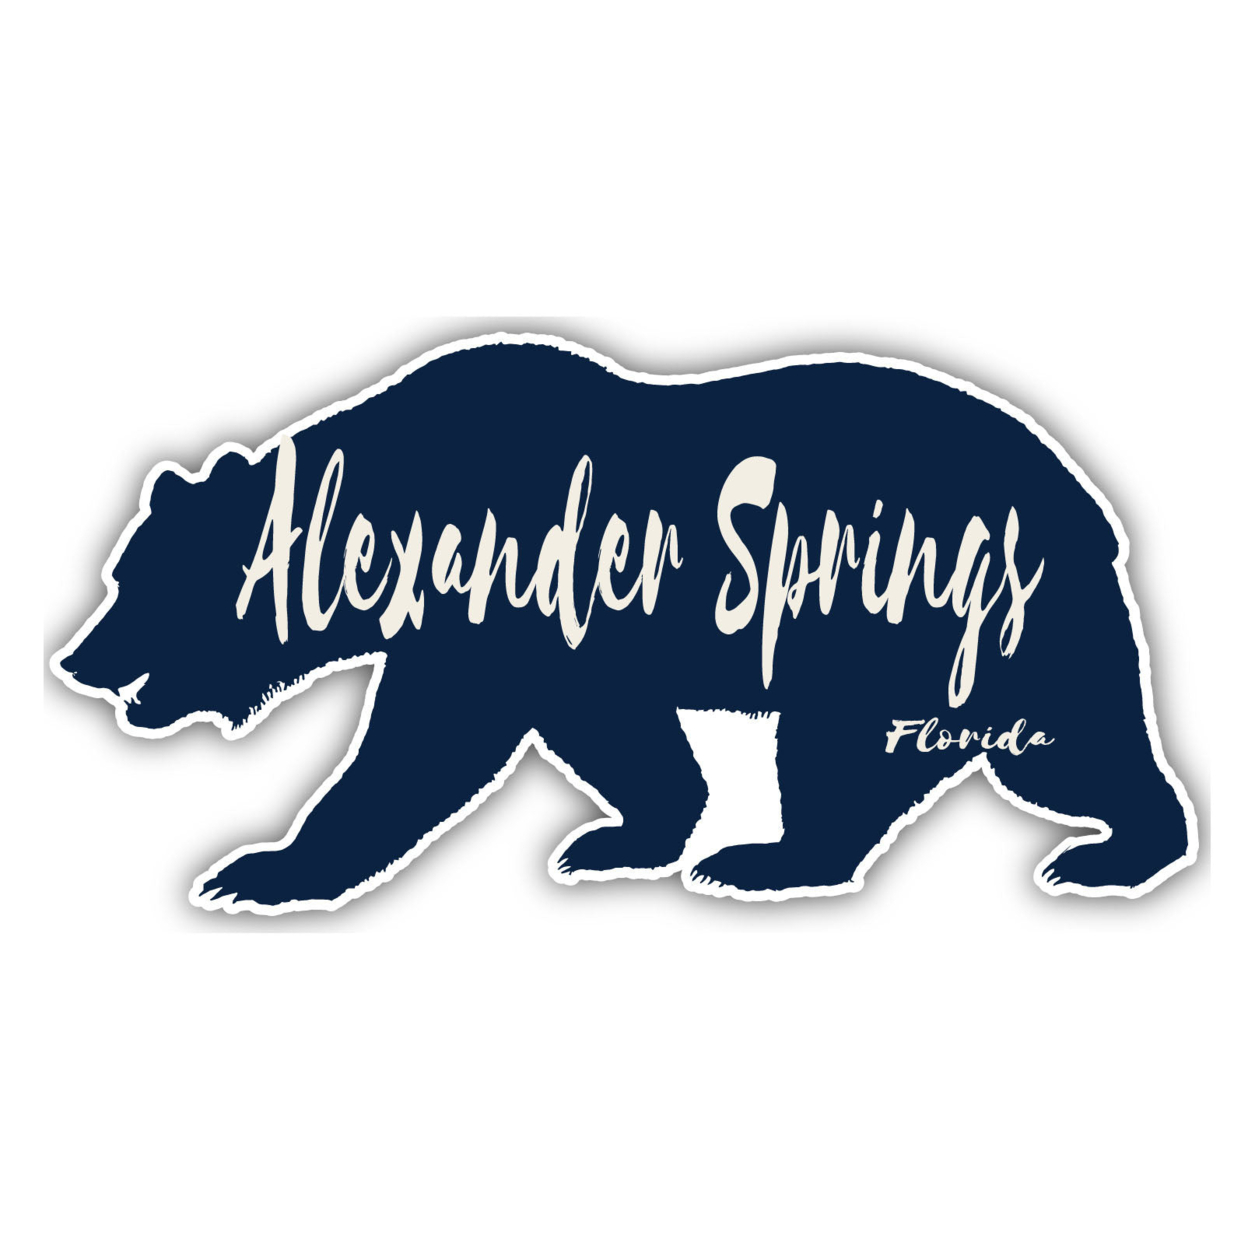 Alexander Springs Florida Souvenir Decorative Stickers (Choose Theme And Size) - Single Unit, 8-Inch, Camp Life